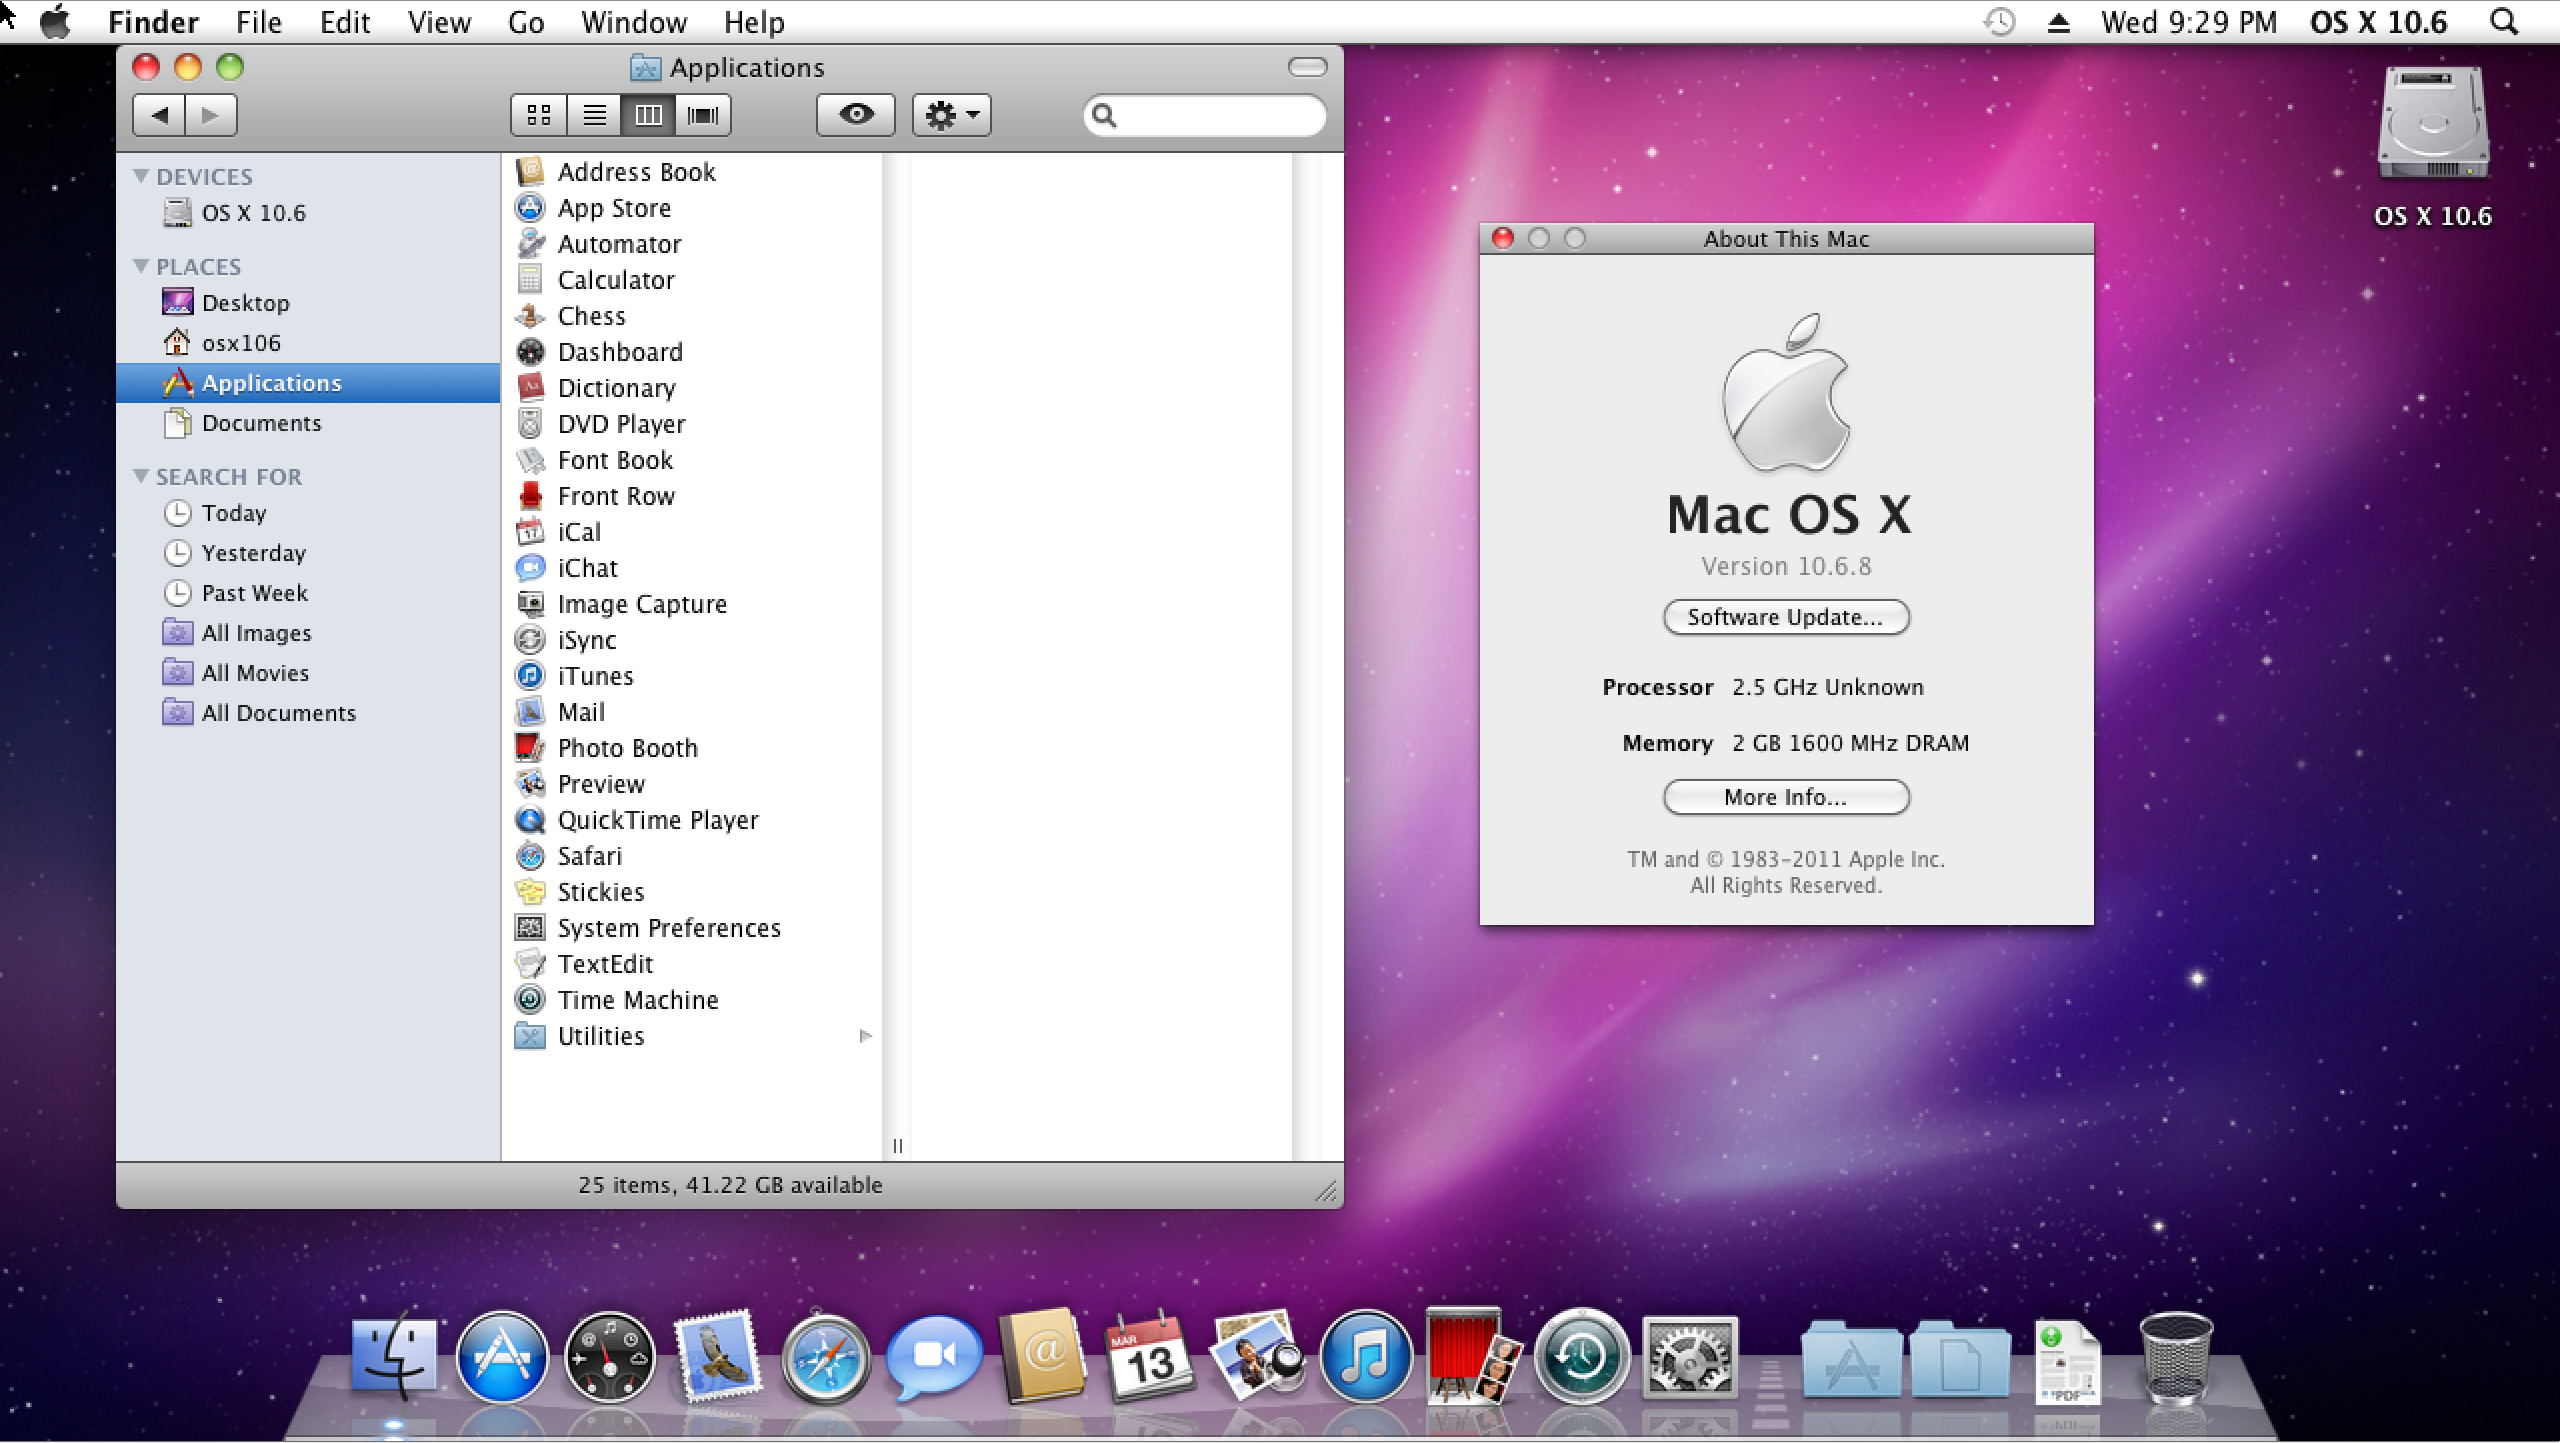 onyx for mac snow leopard 10.6.8